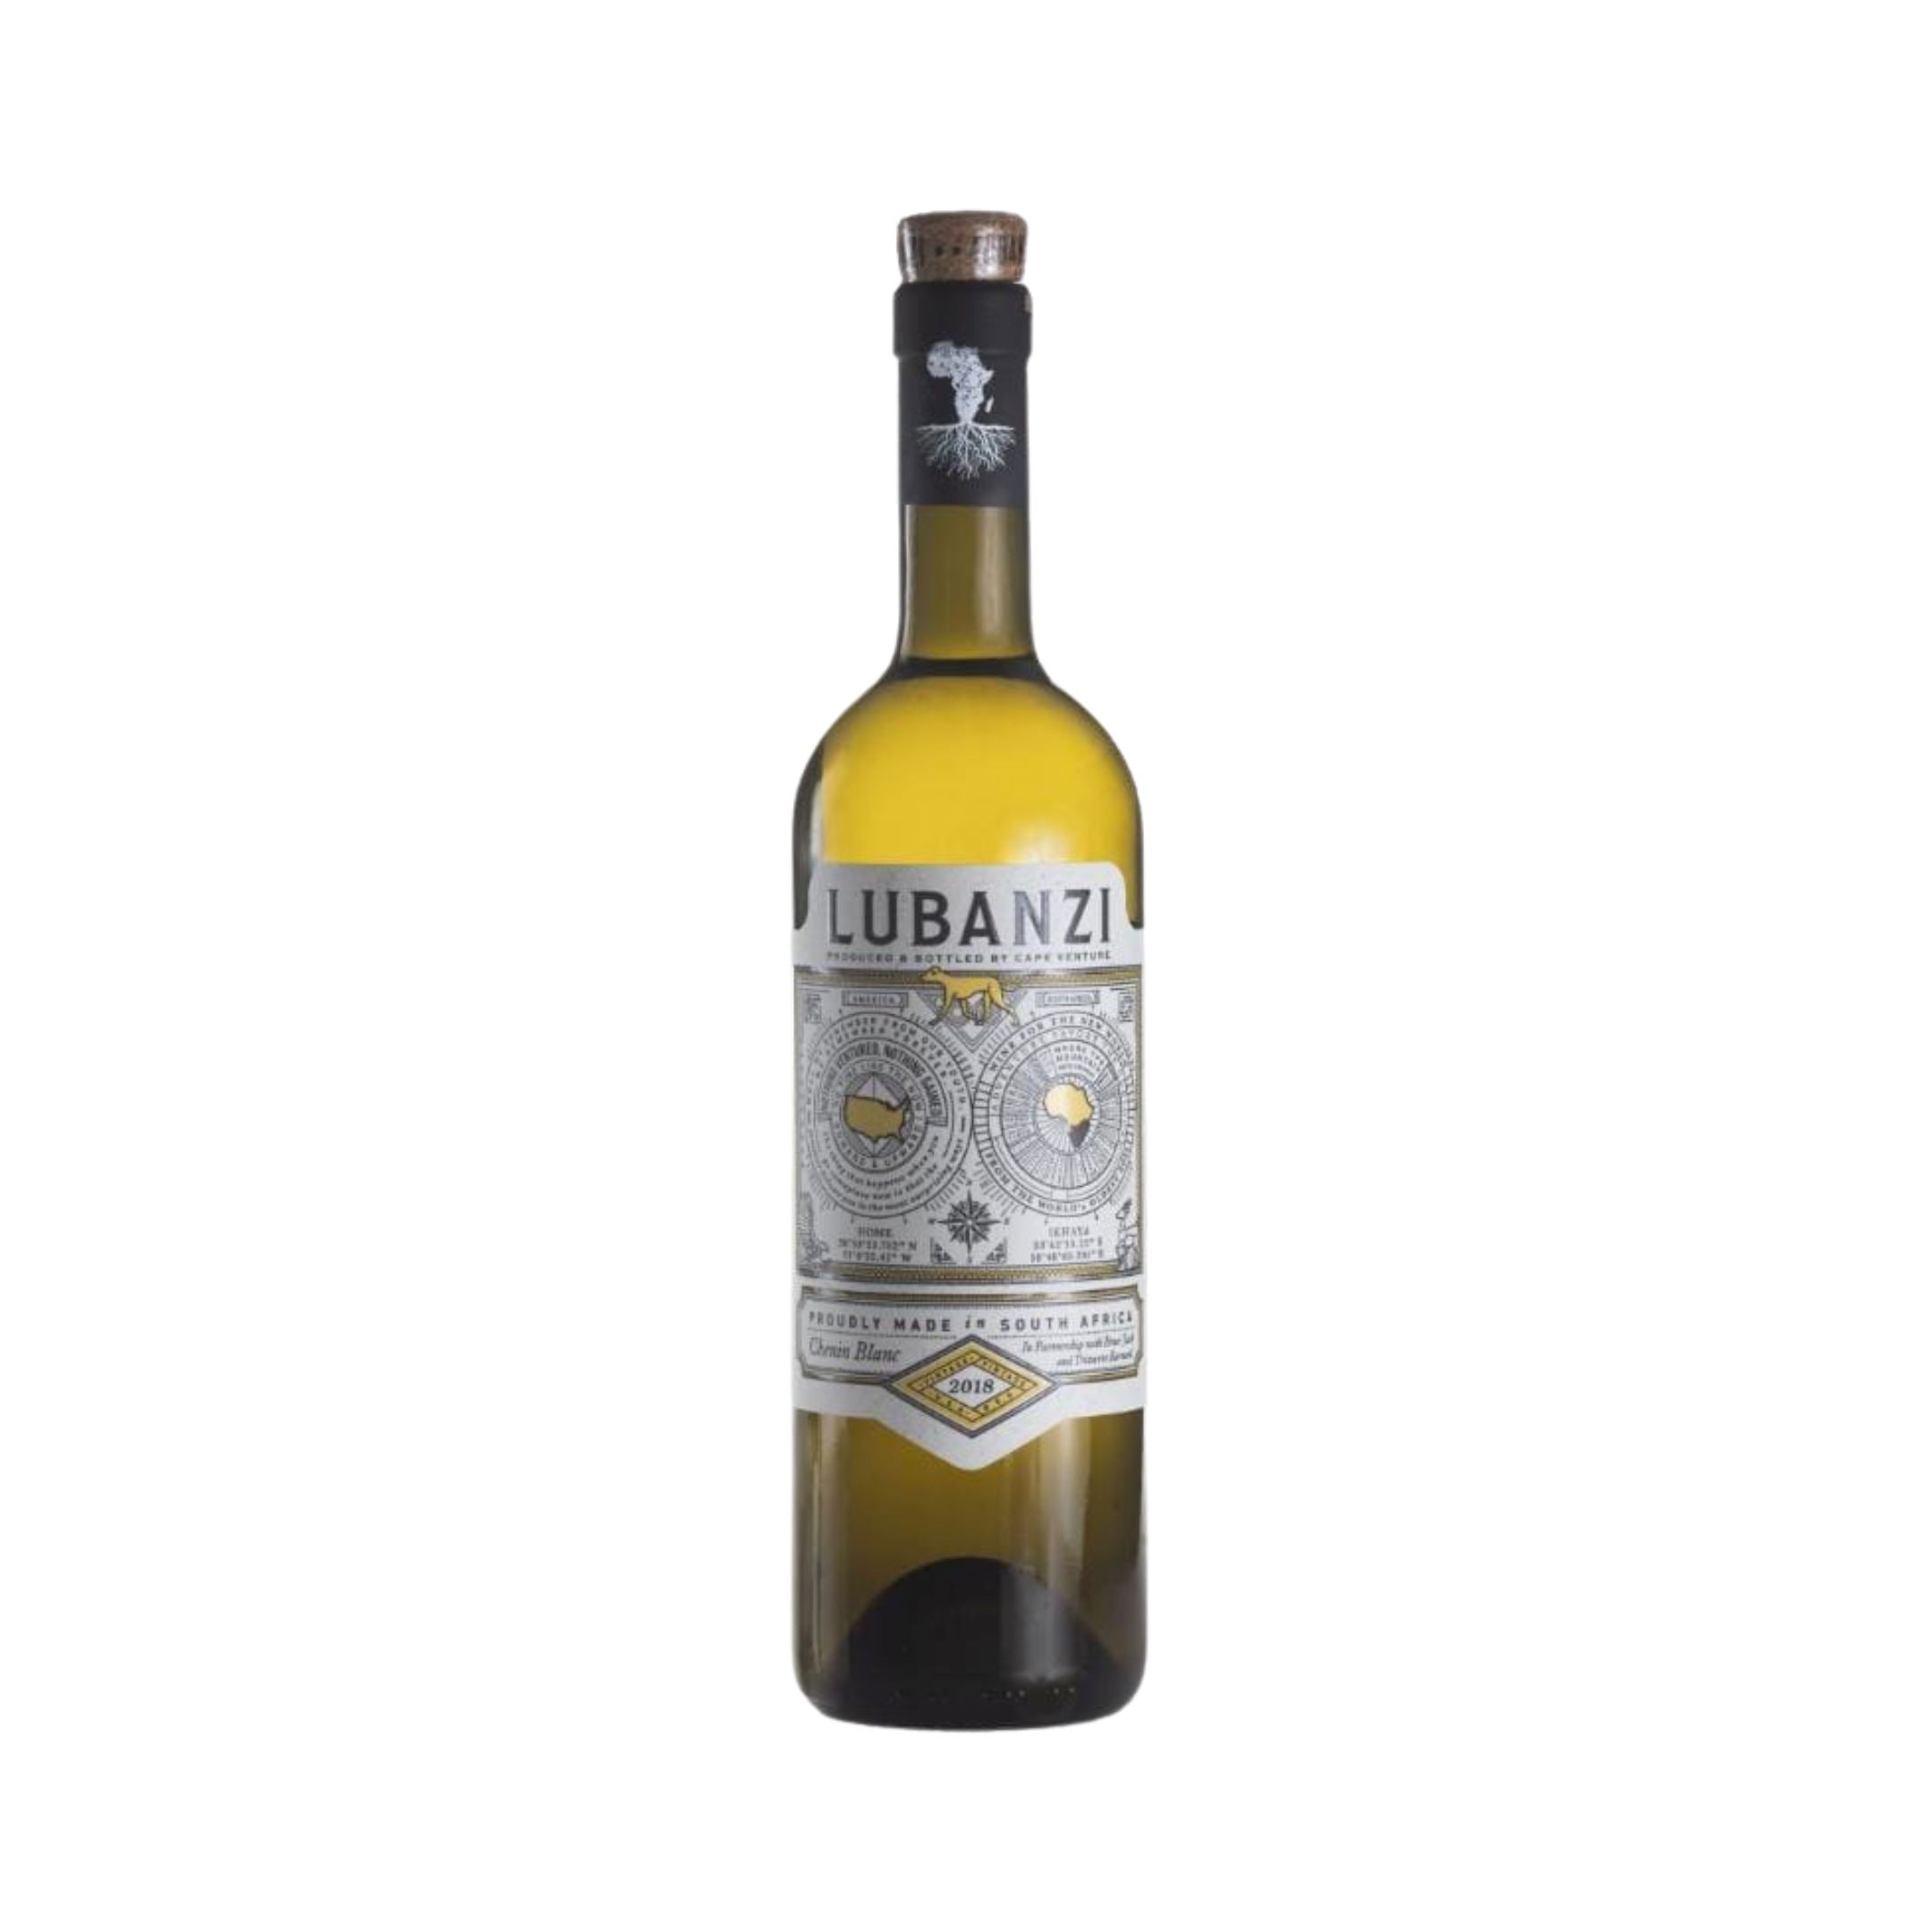 Lubanzi, Chenin Blanc, Swartland, South Africa, 2020 Wine Bottle MJ WIne Cellars 